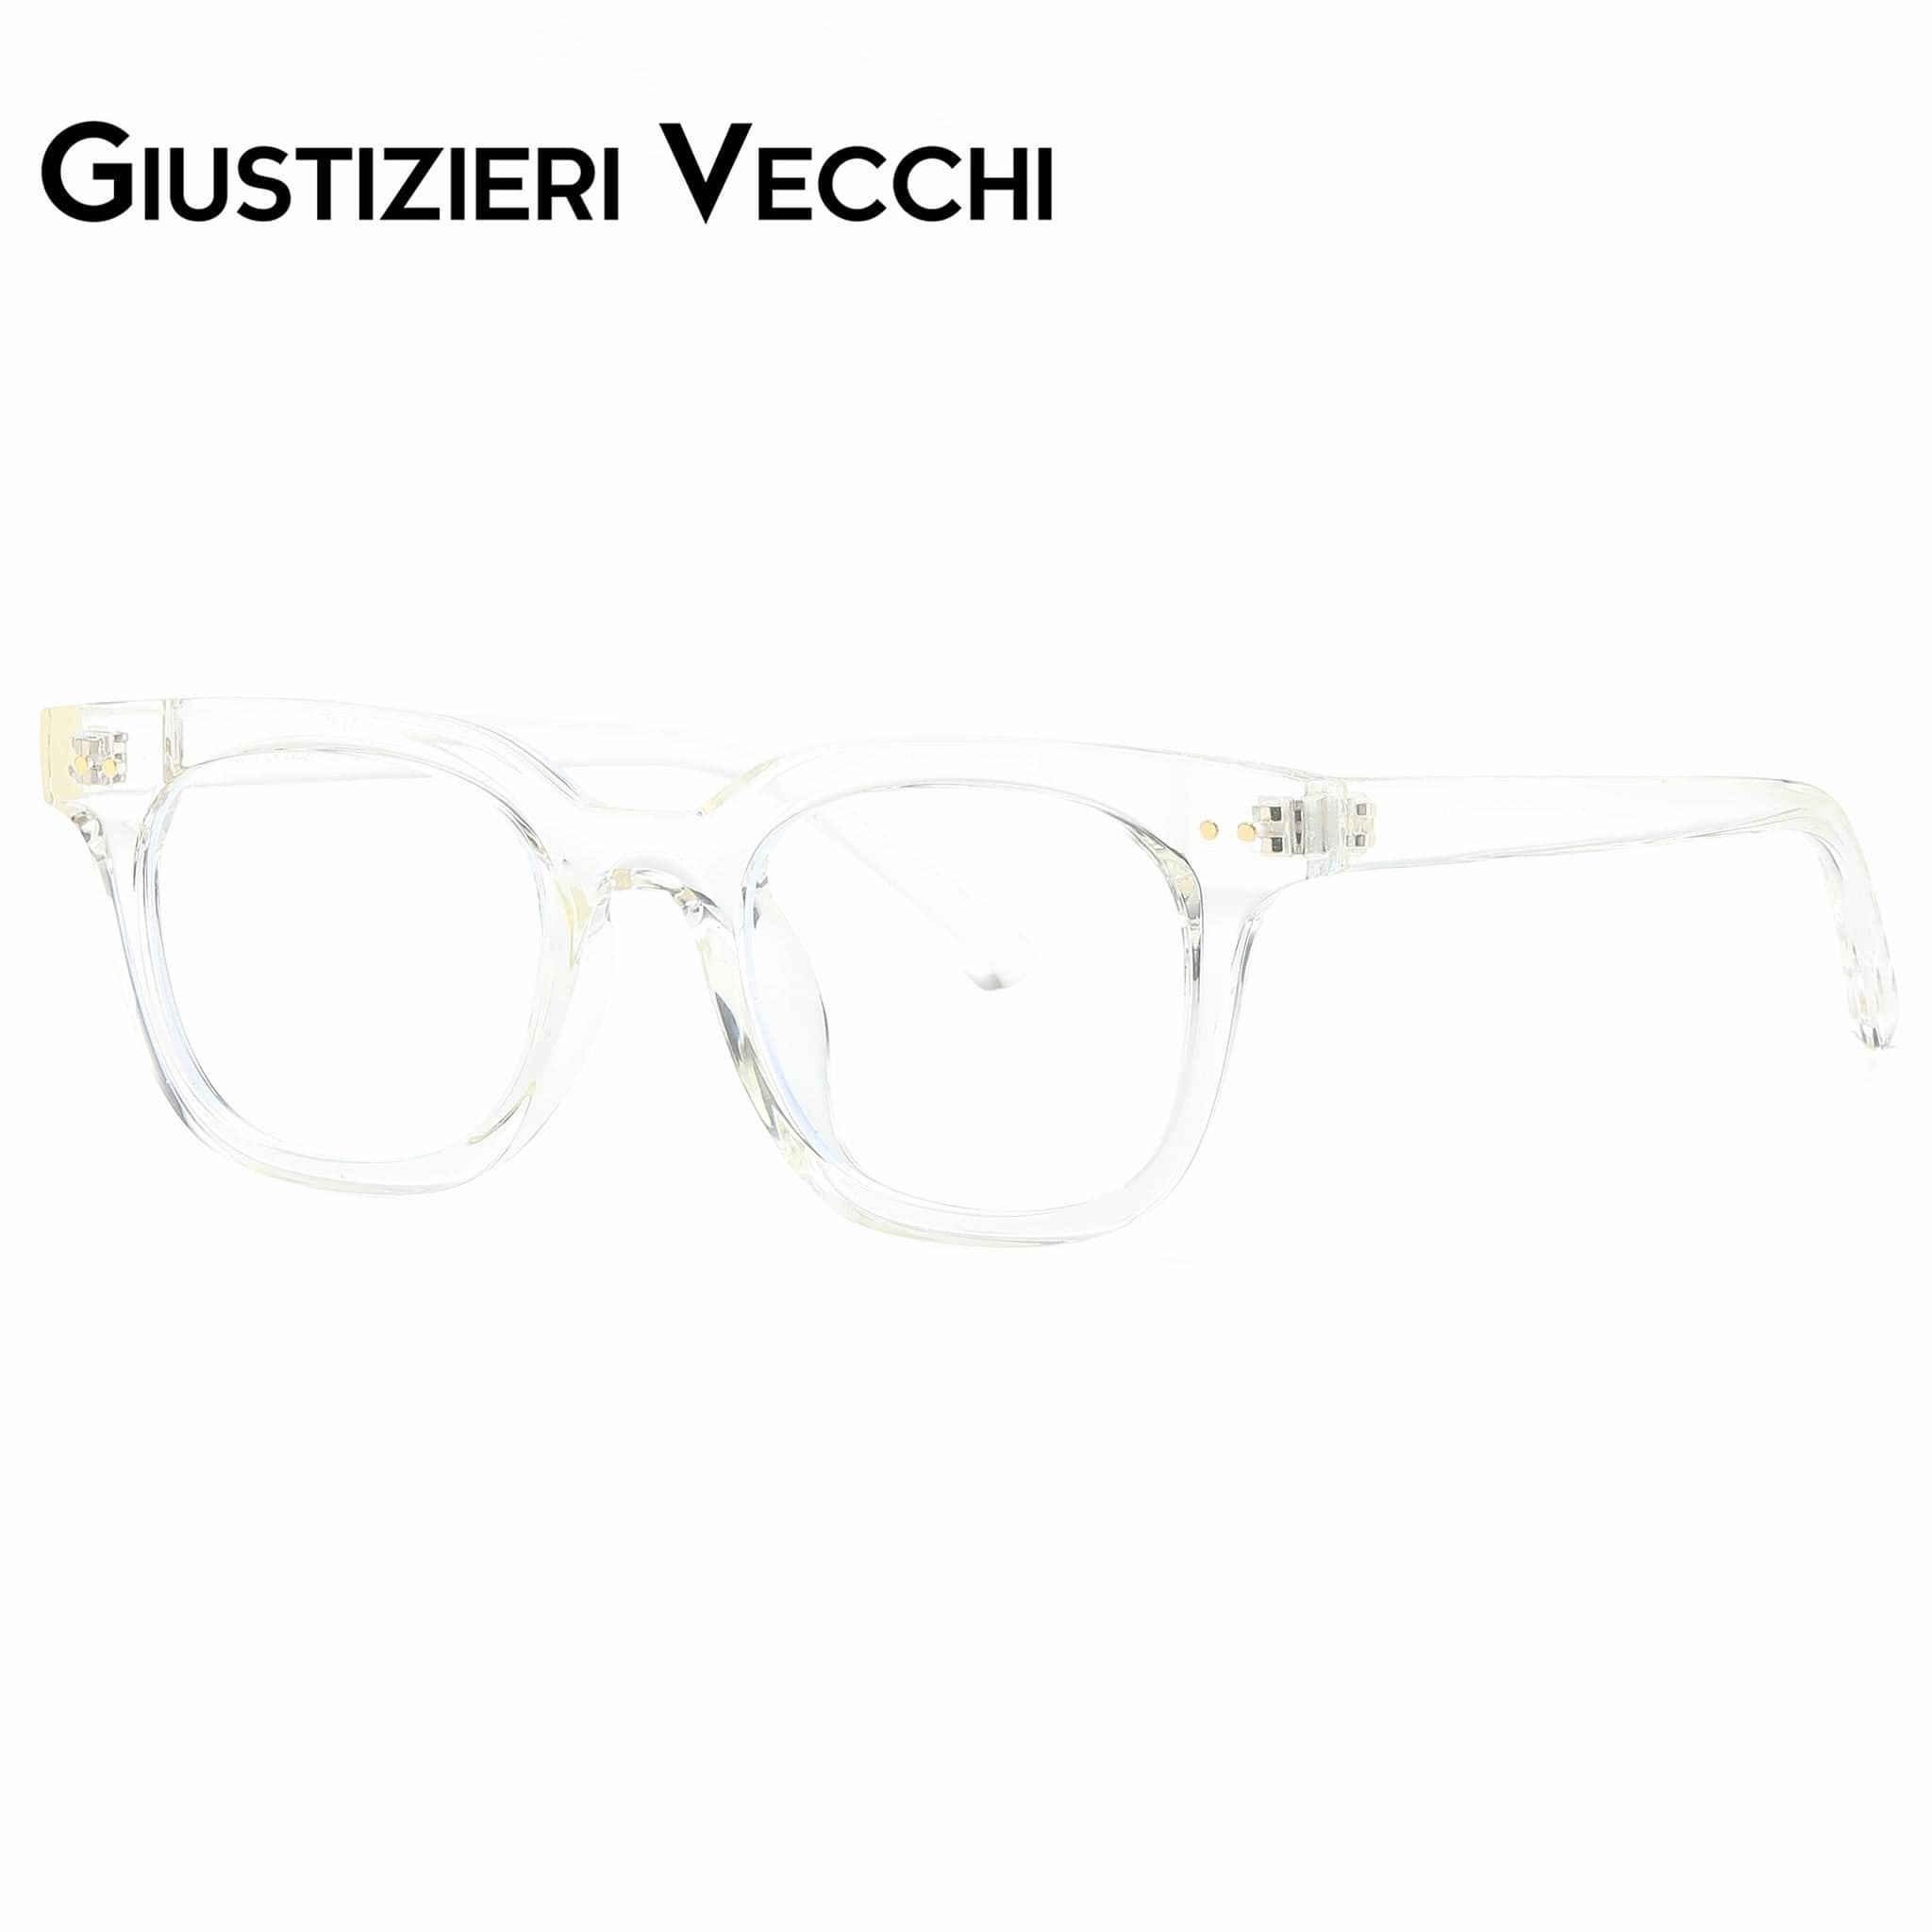 GIUSTIZIERI VECCHI Eyeglasses Phantom Duo